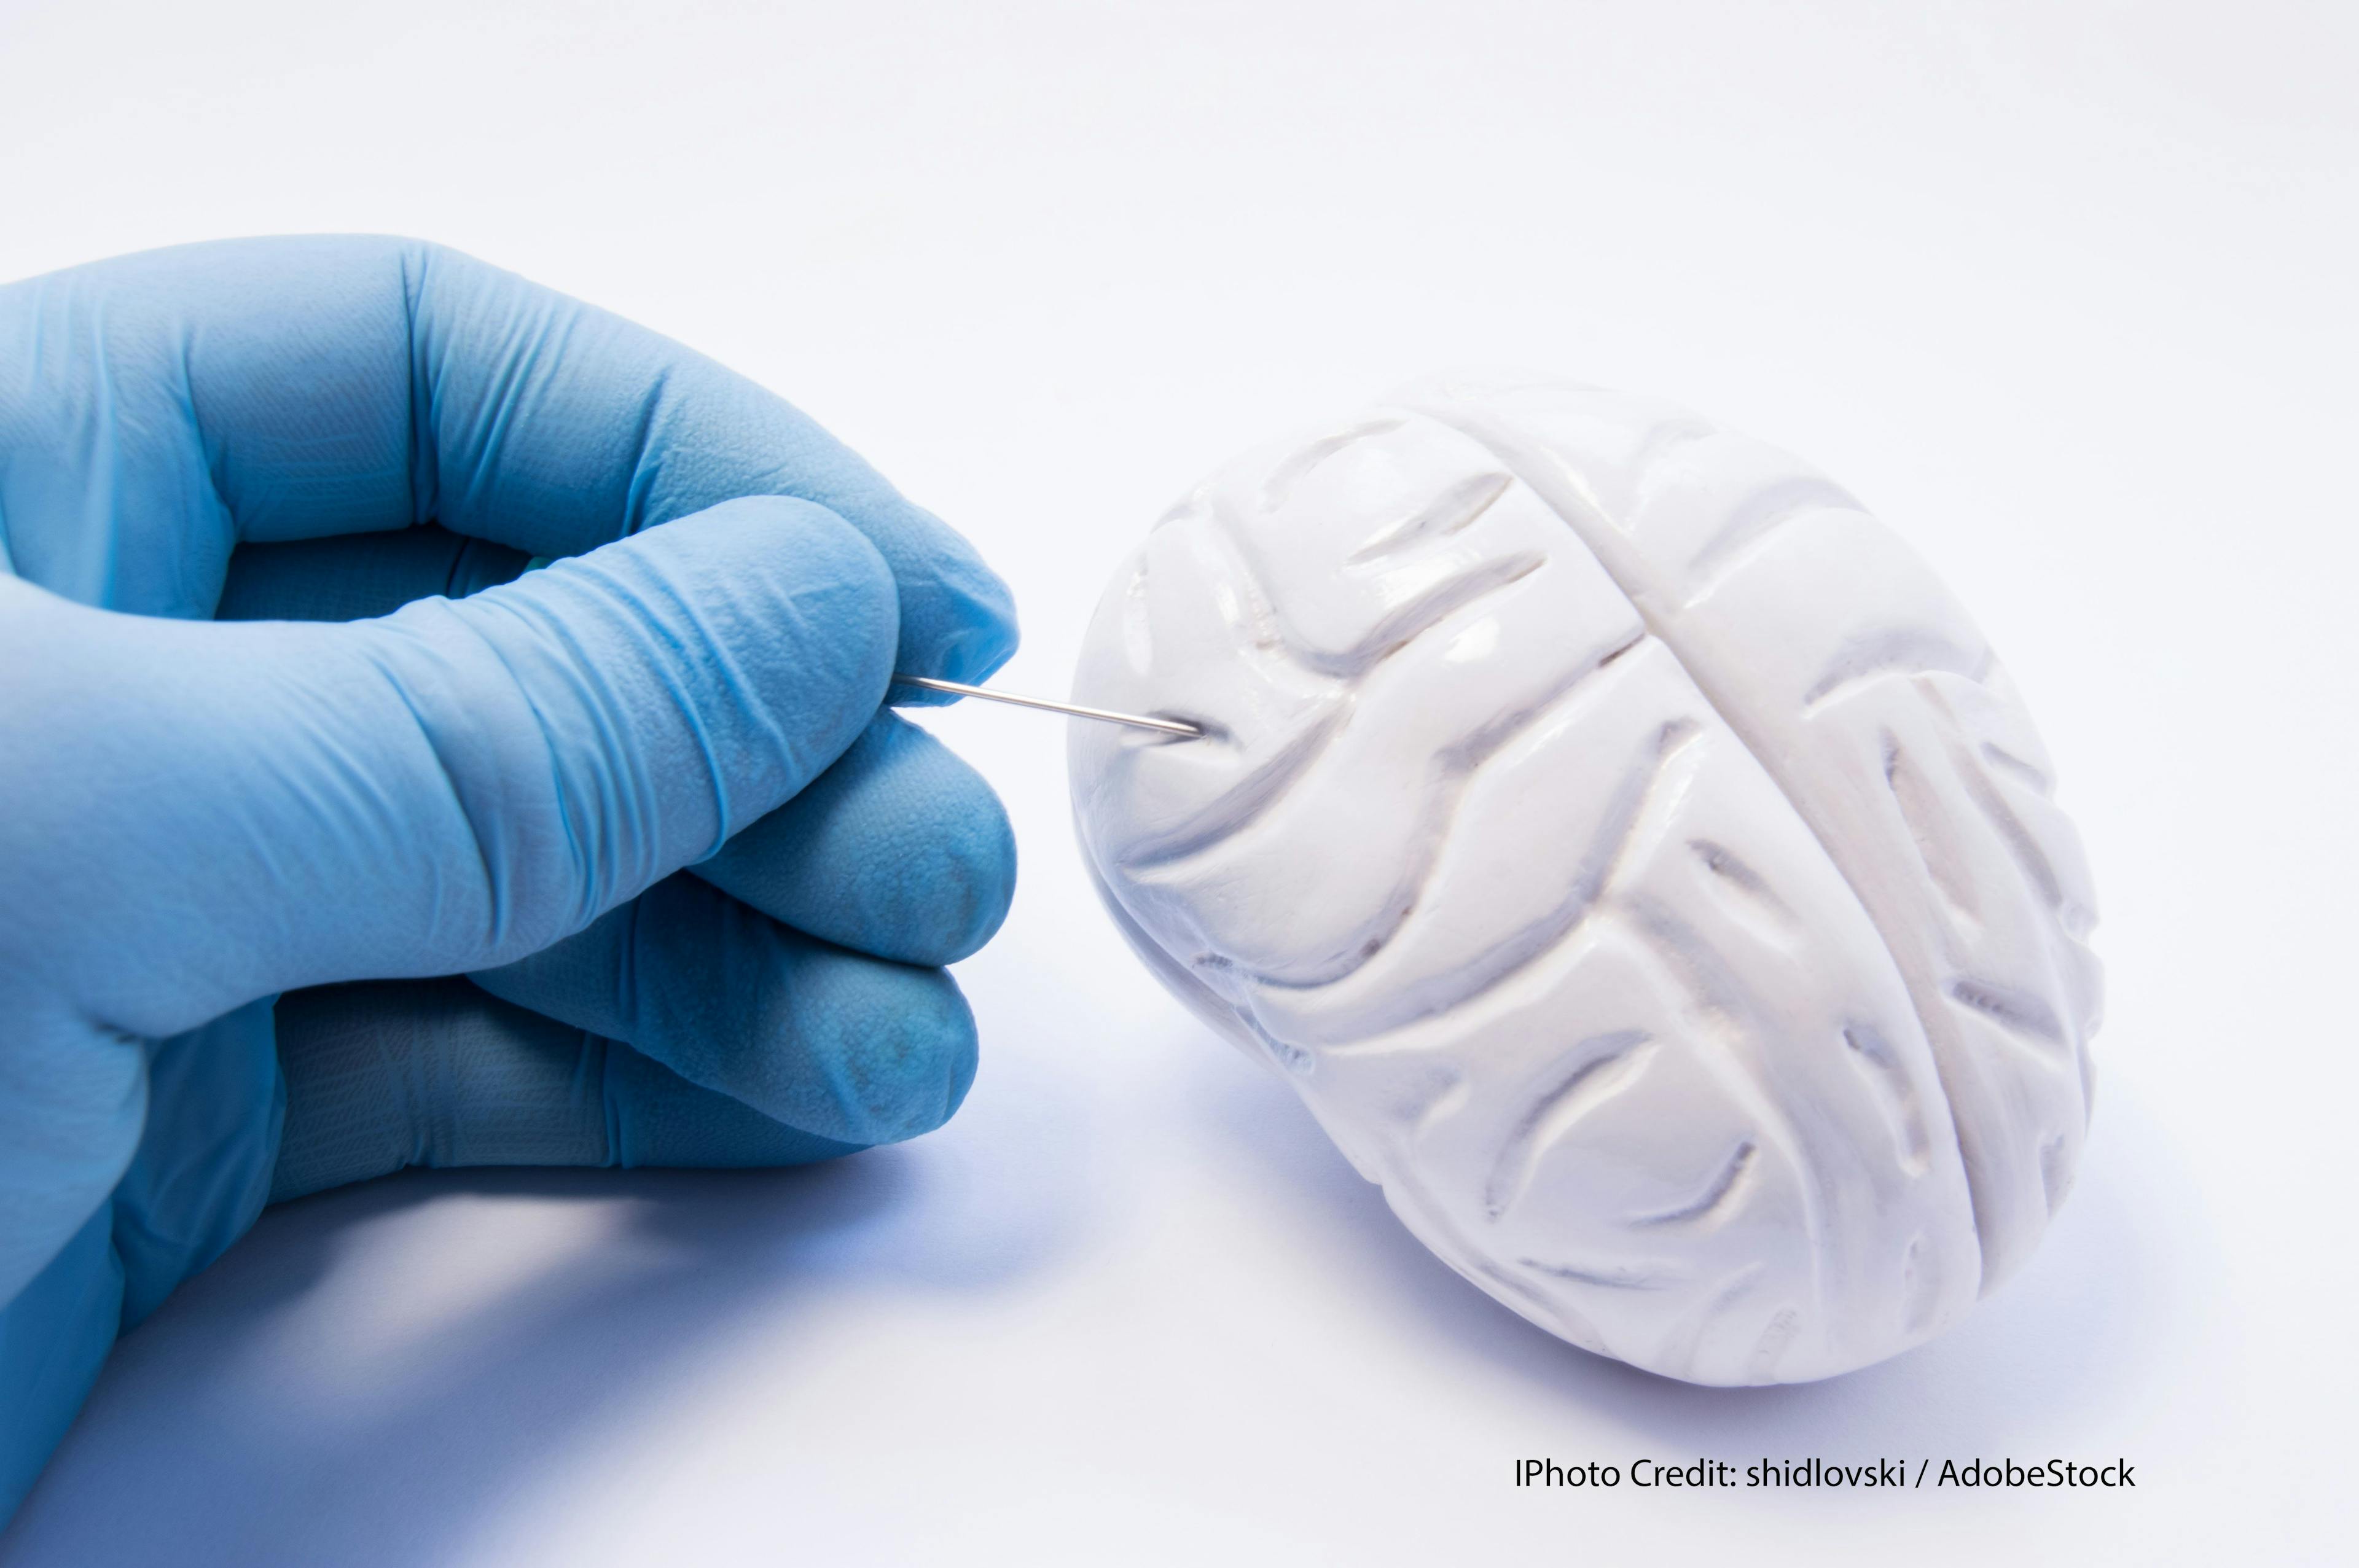 Do Bigger Brains Contribute to More Cancer?